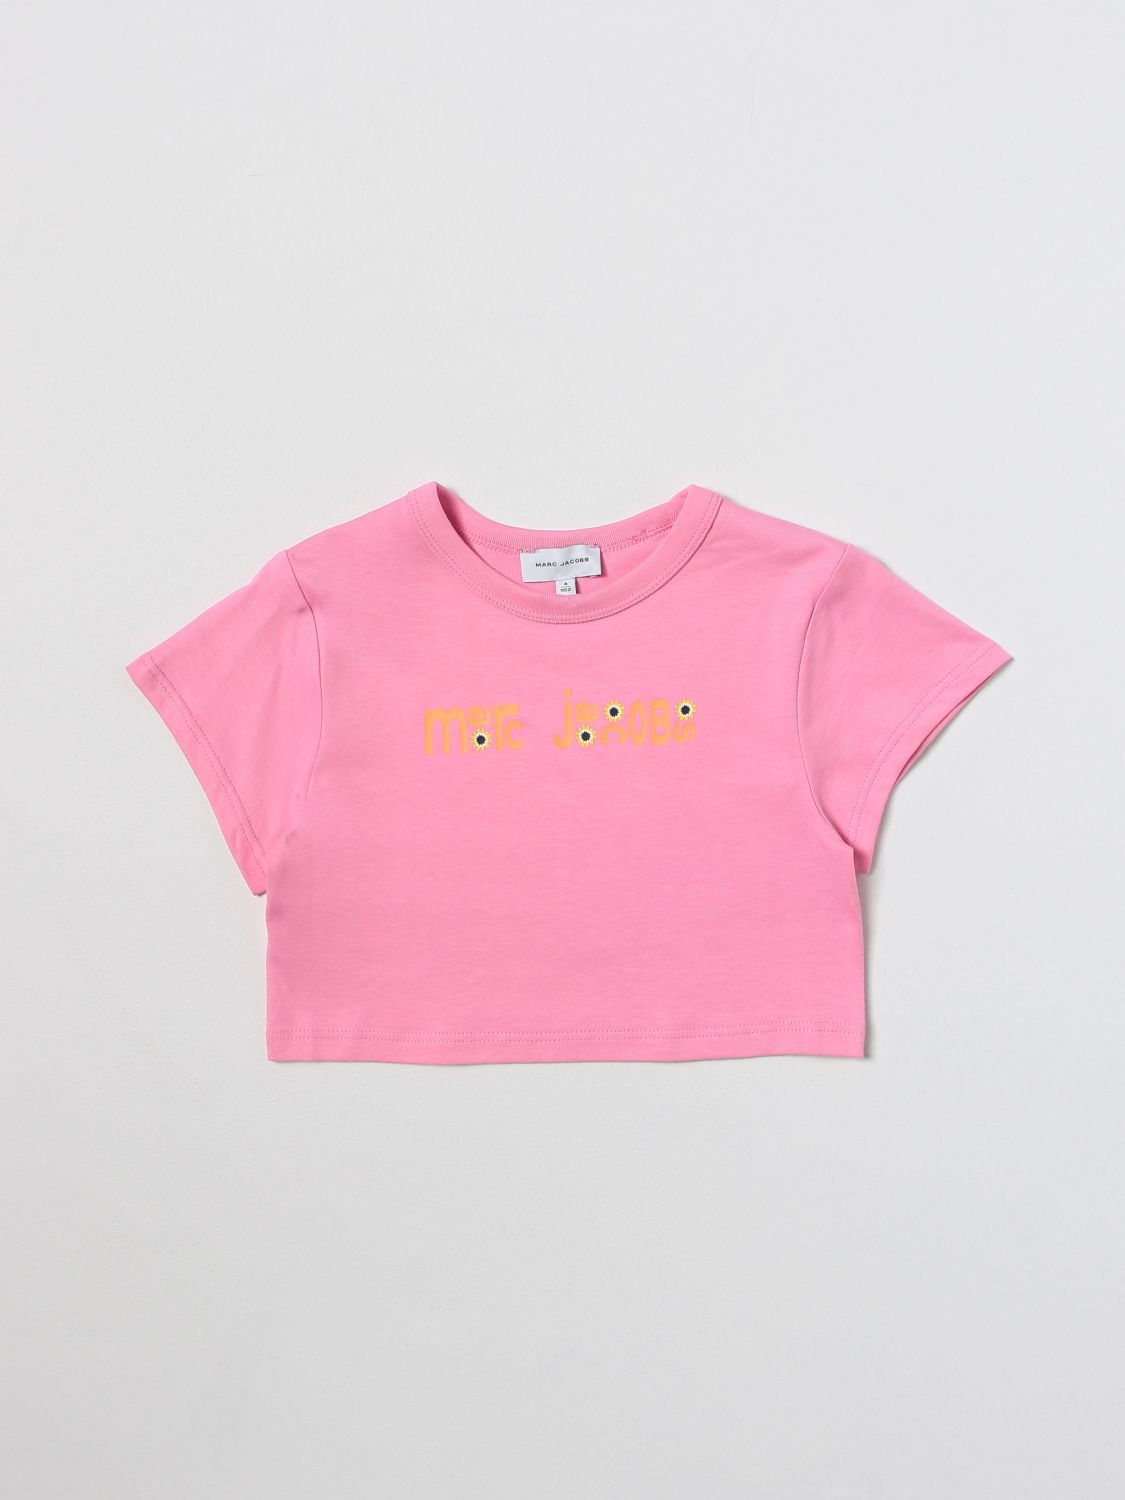 LITTLE MARC JACOBS: t-shirt for girls - Pink | Little Marc Jacobs t ...